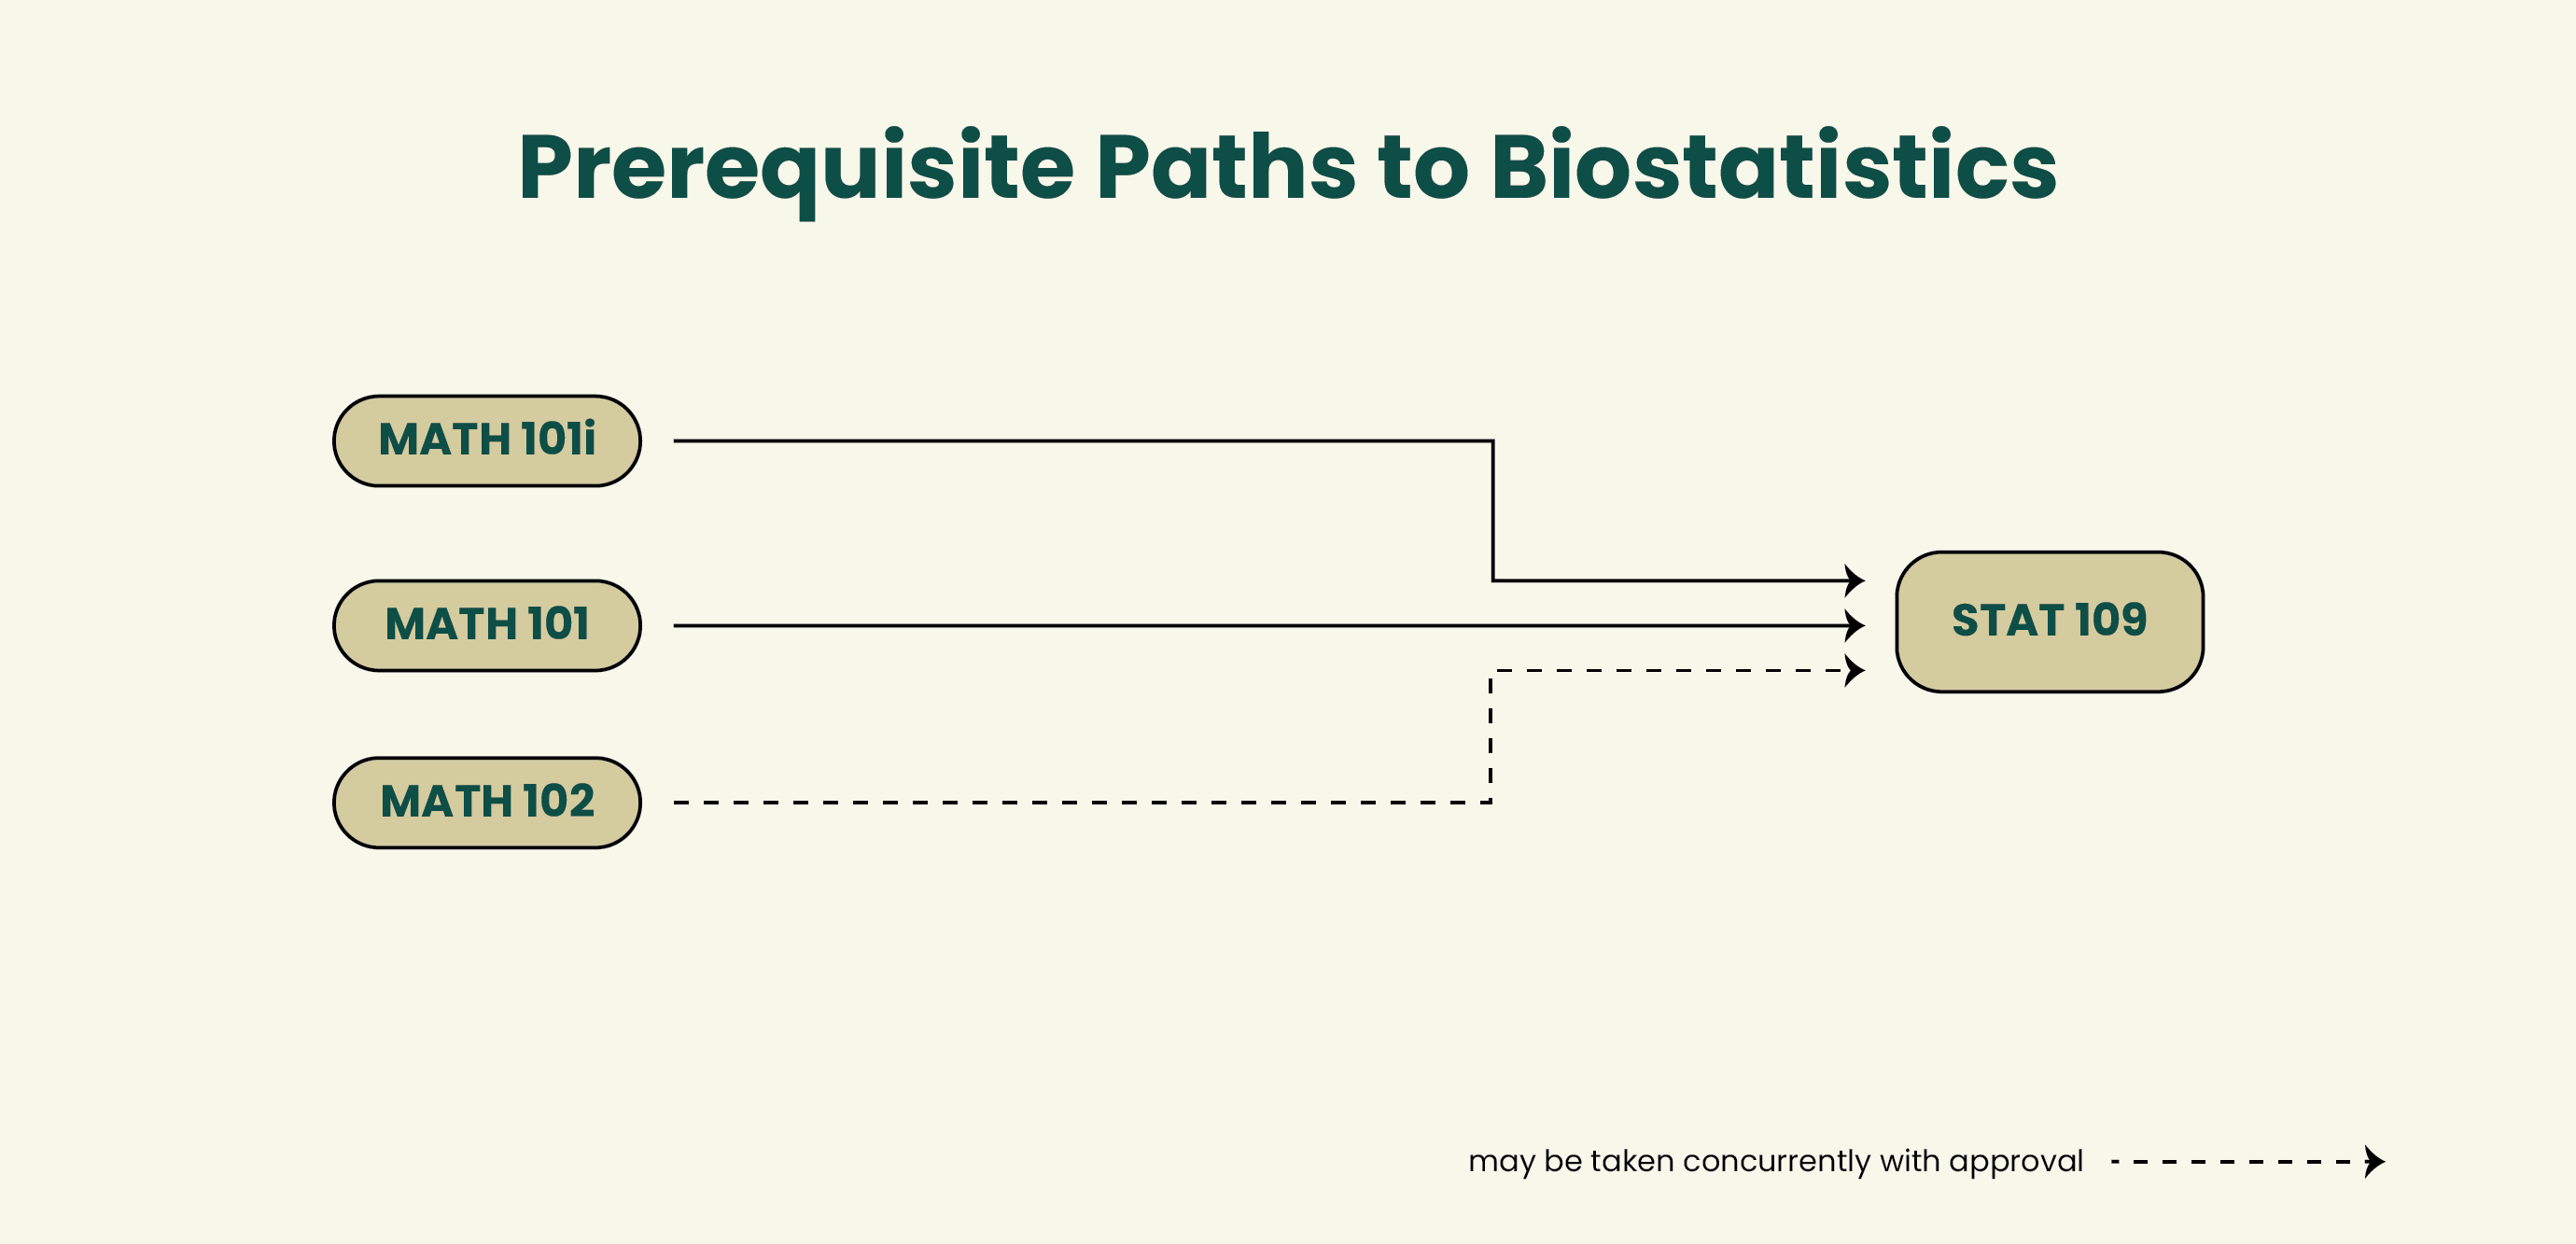 Image showing prerequisite pathways to biostatistics